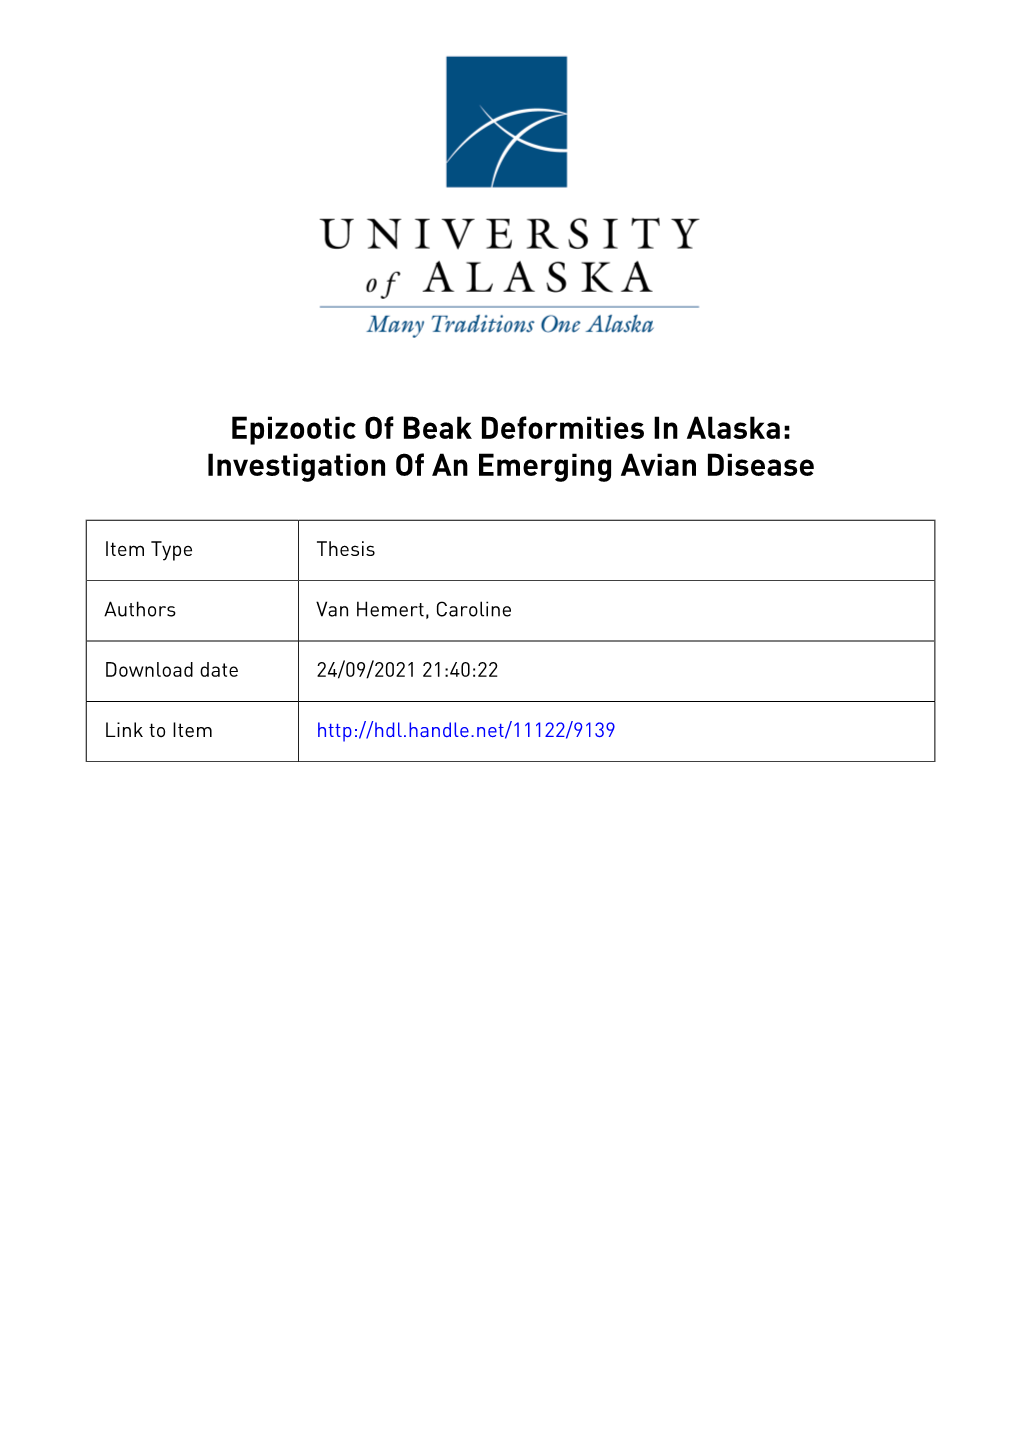 Epizootic of Beak Deformities in Alaska: Investigation of an Emerging Avian Disease